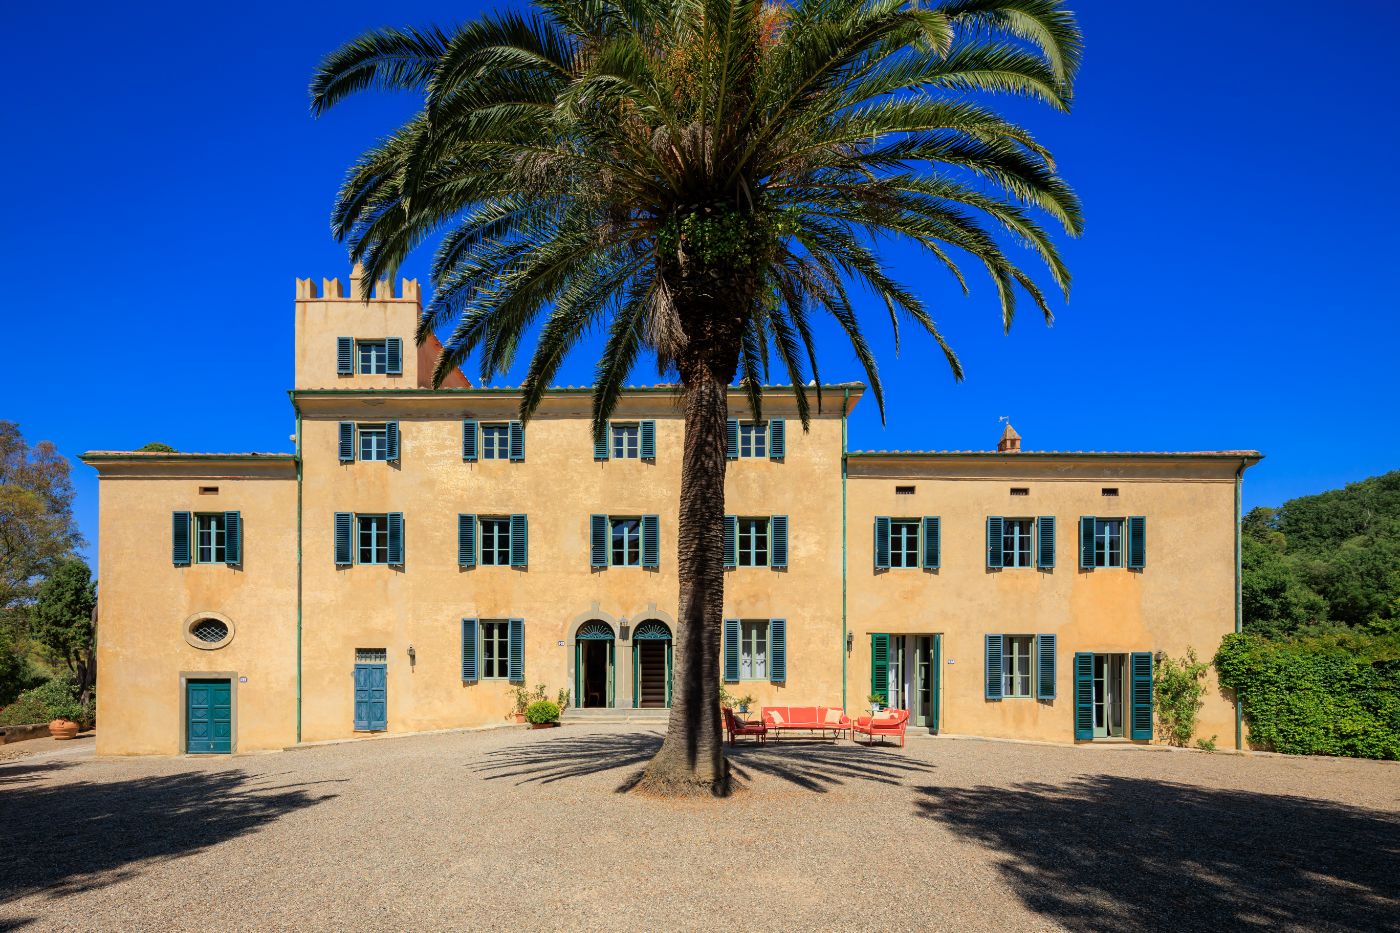 The front exterior of Villa Montecristo.